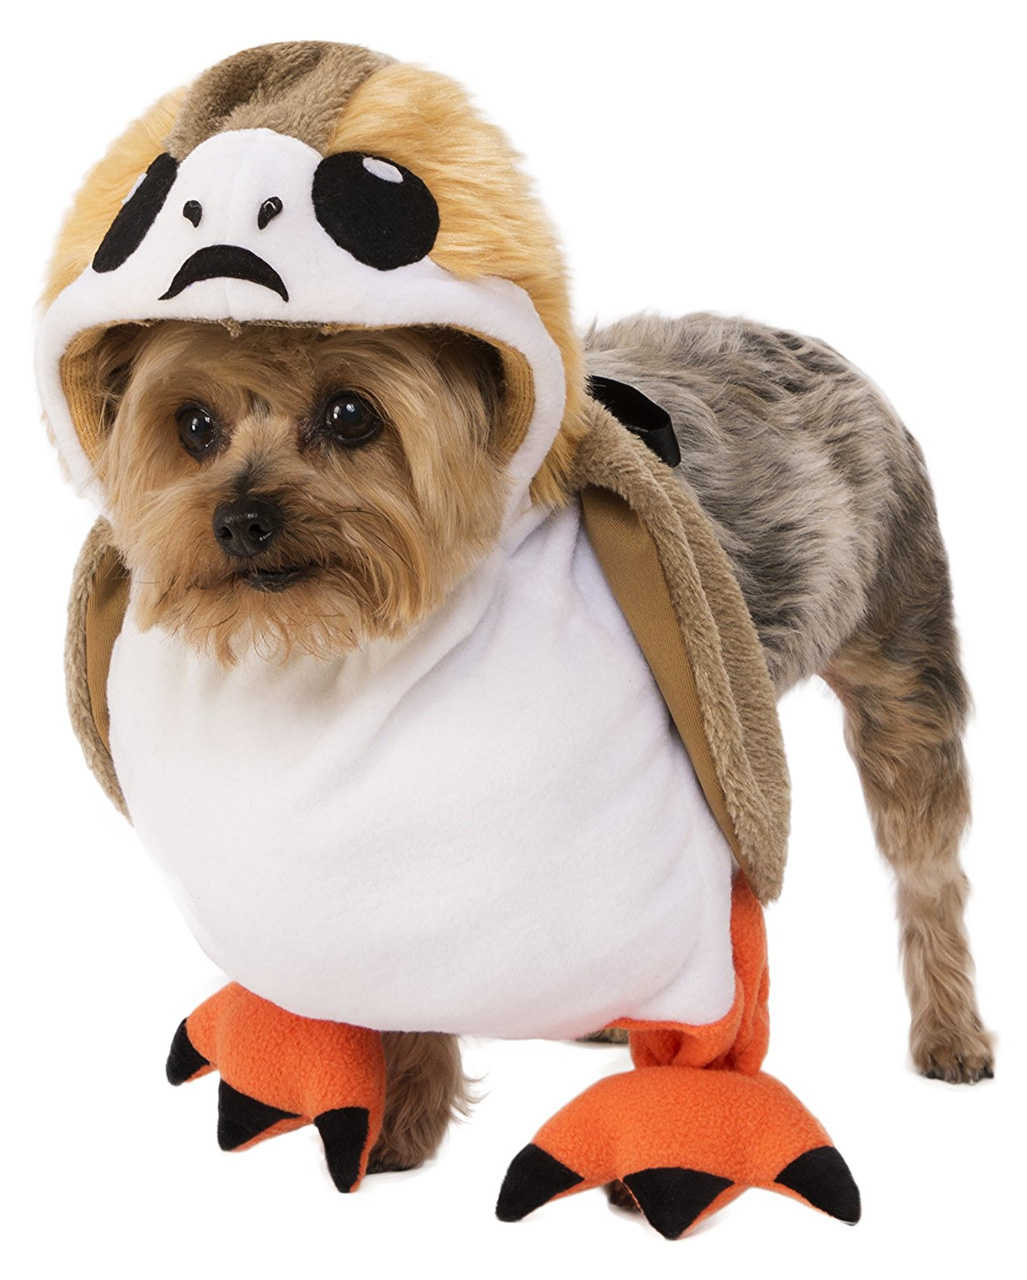 WIL Kinder Kostüm Hund Hundekostüm Karneval Fasching